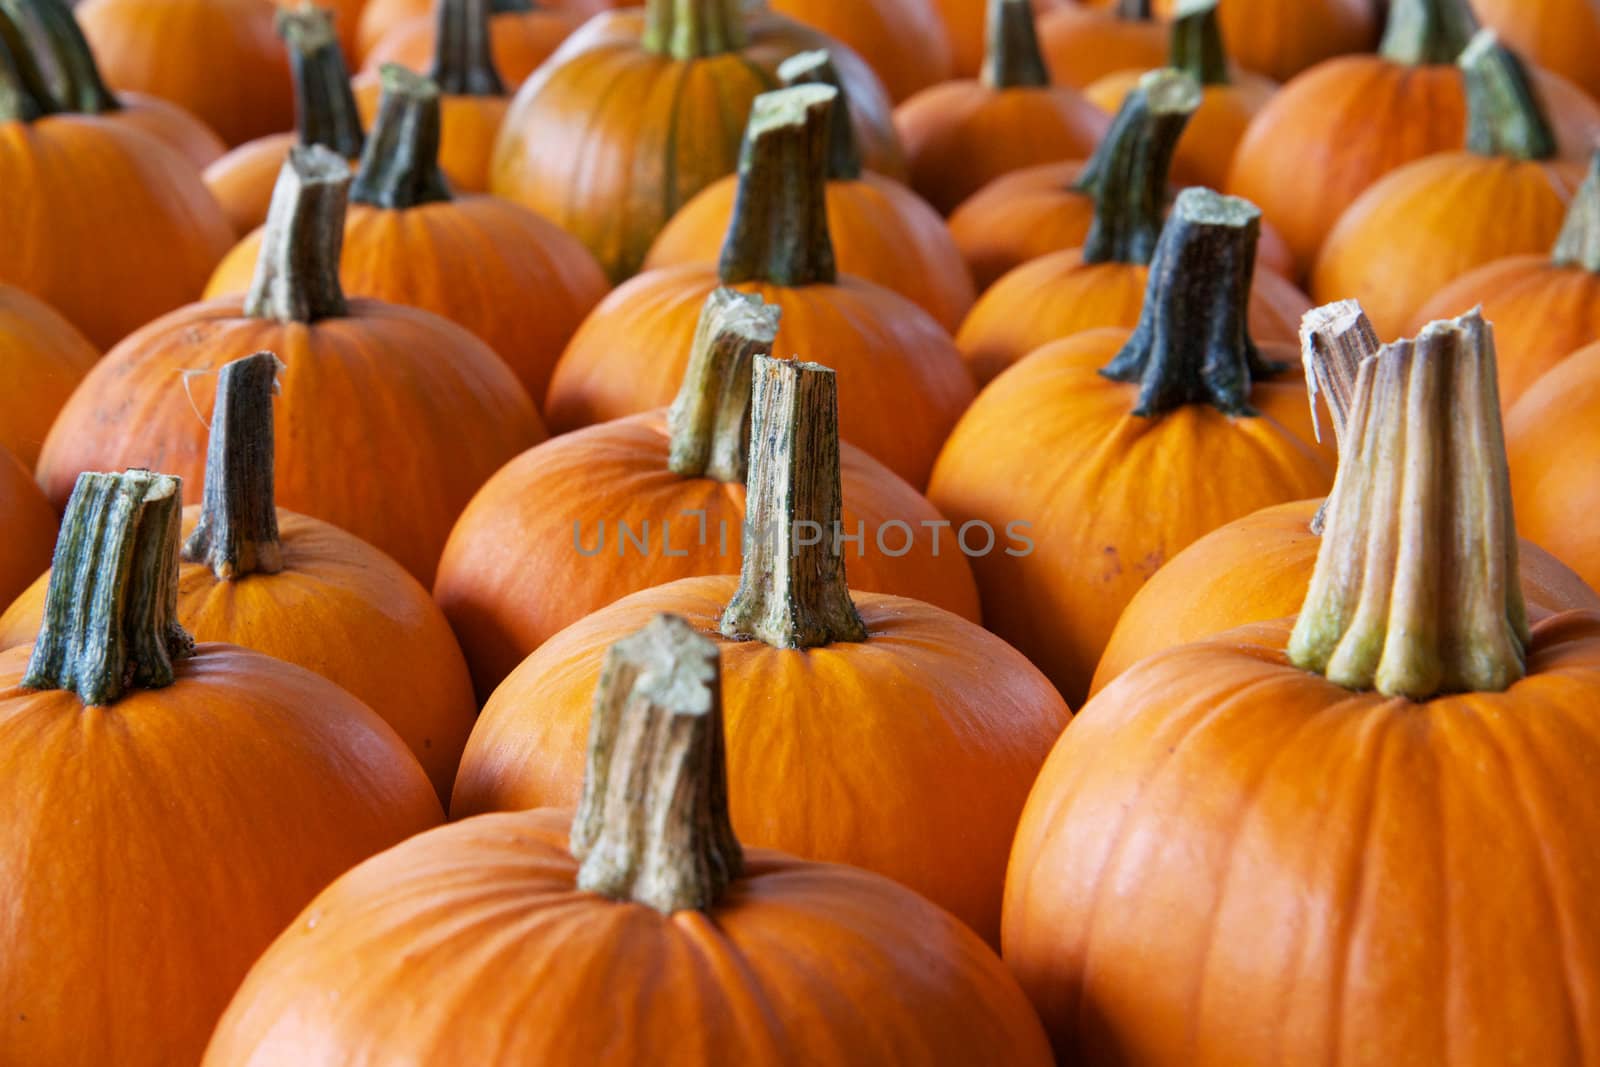 Rows of pumpkins perspective by bobkeenan